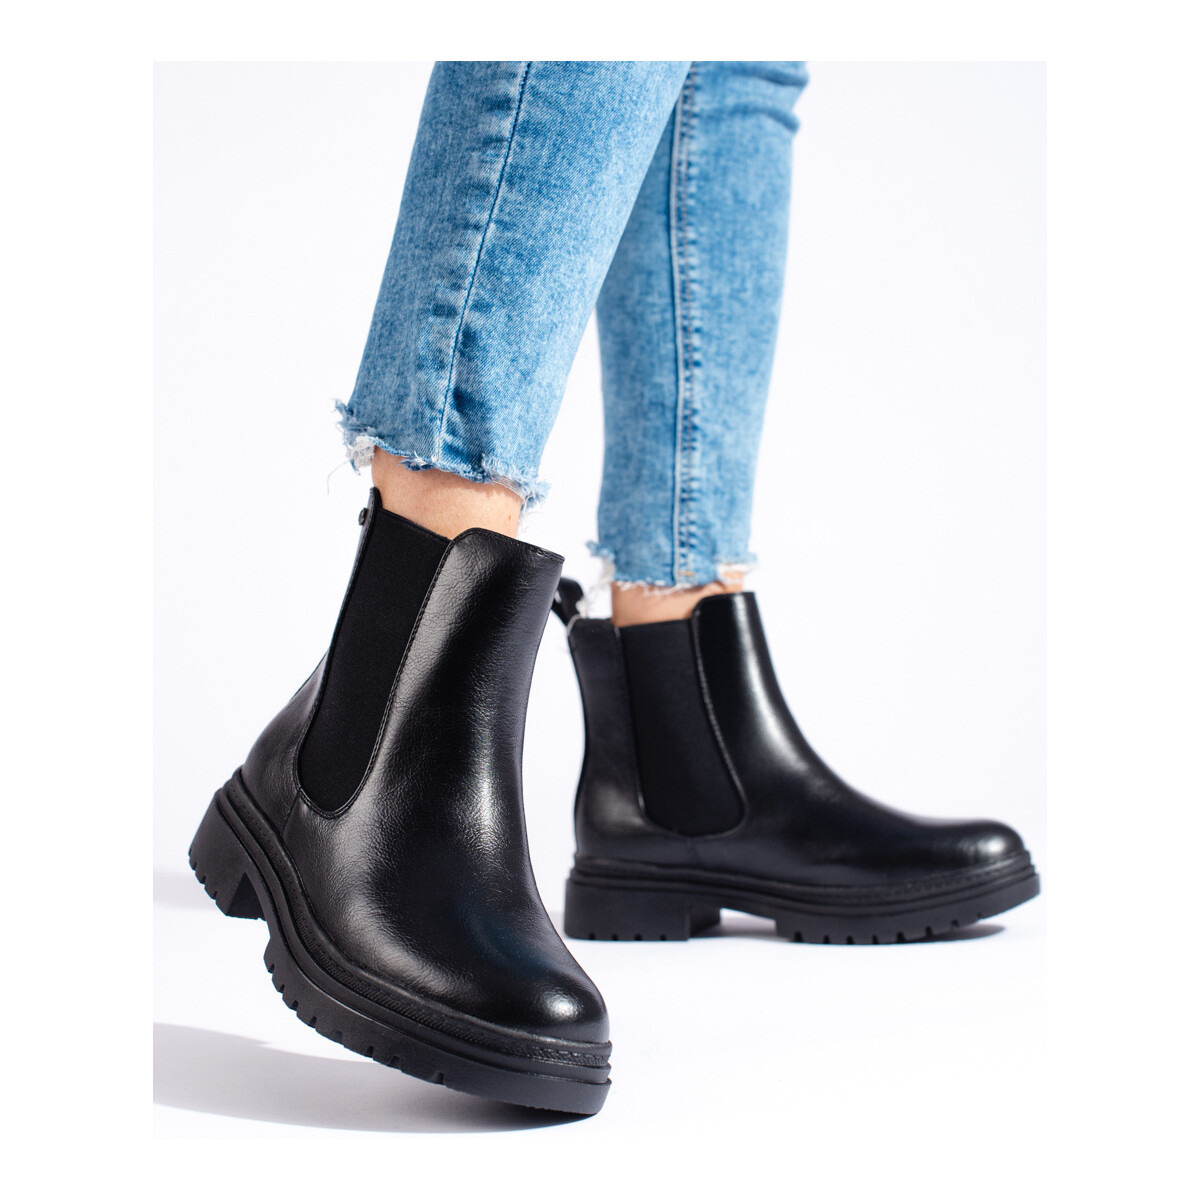 W. Potocki  Trendy dámské  kotníčkové boty černé platforma  ruznobarevne